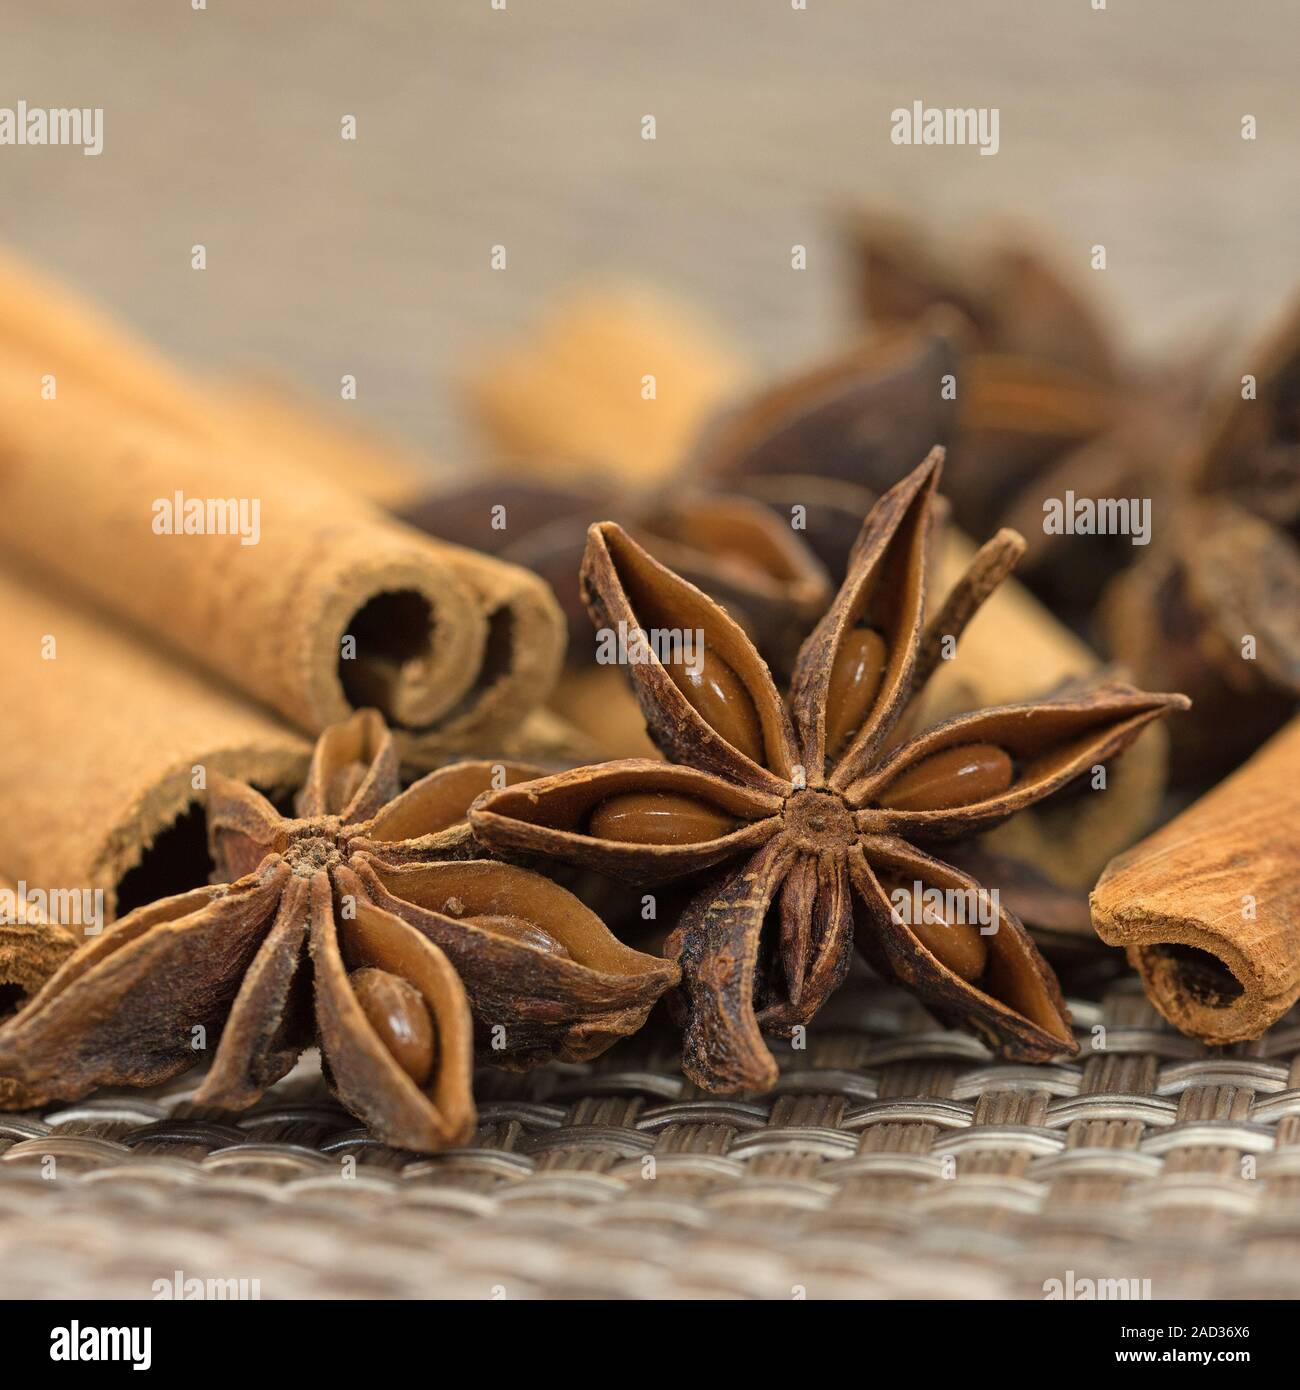 Anise stars and cinnamon sticks Stock Photo